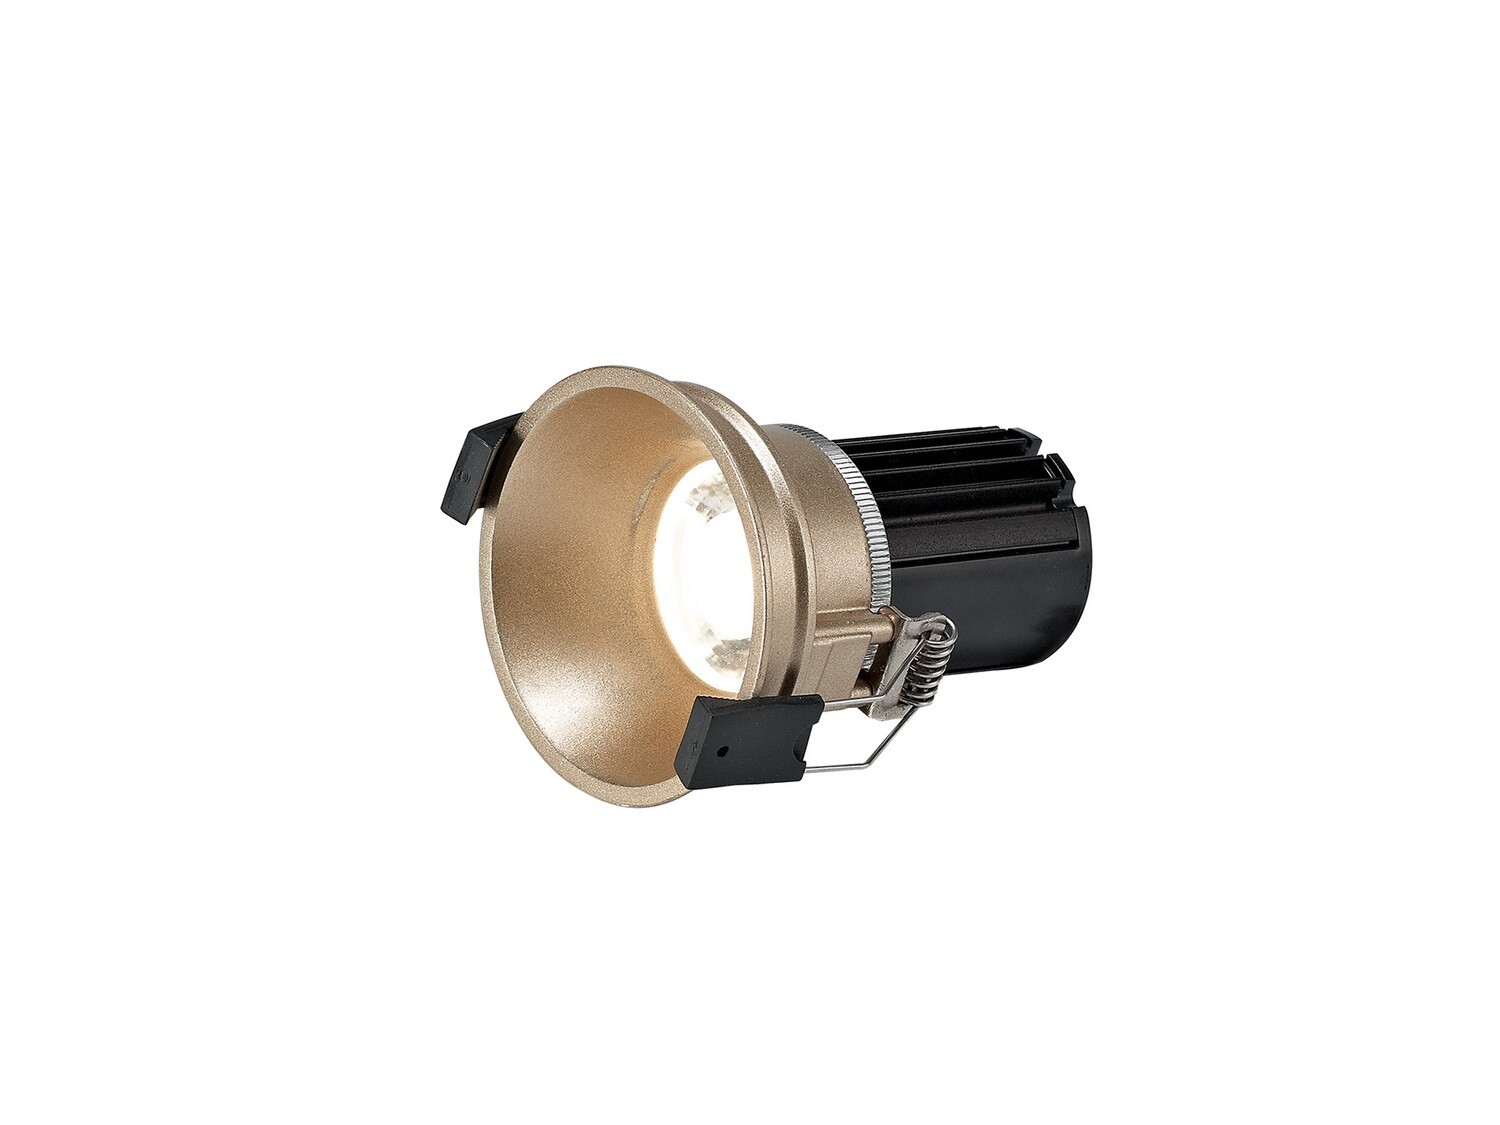 TRIDON LED Spot-light 10W 810lm Gold